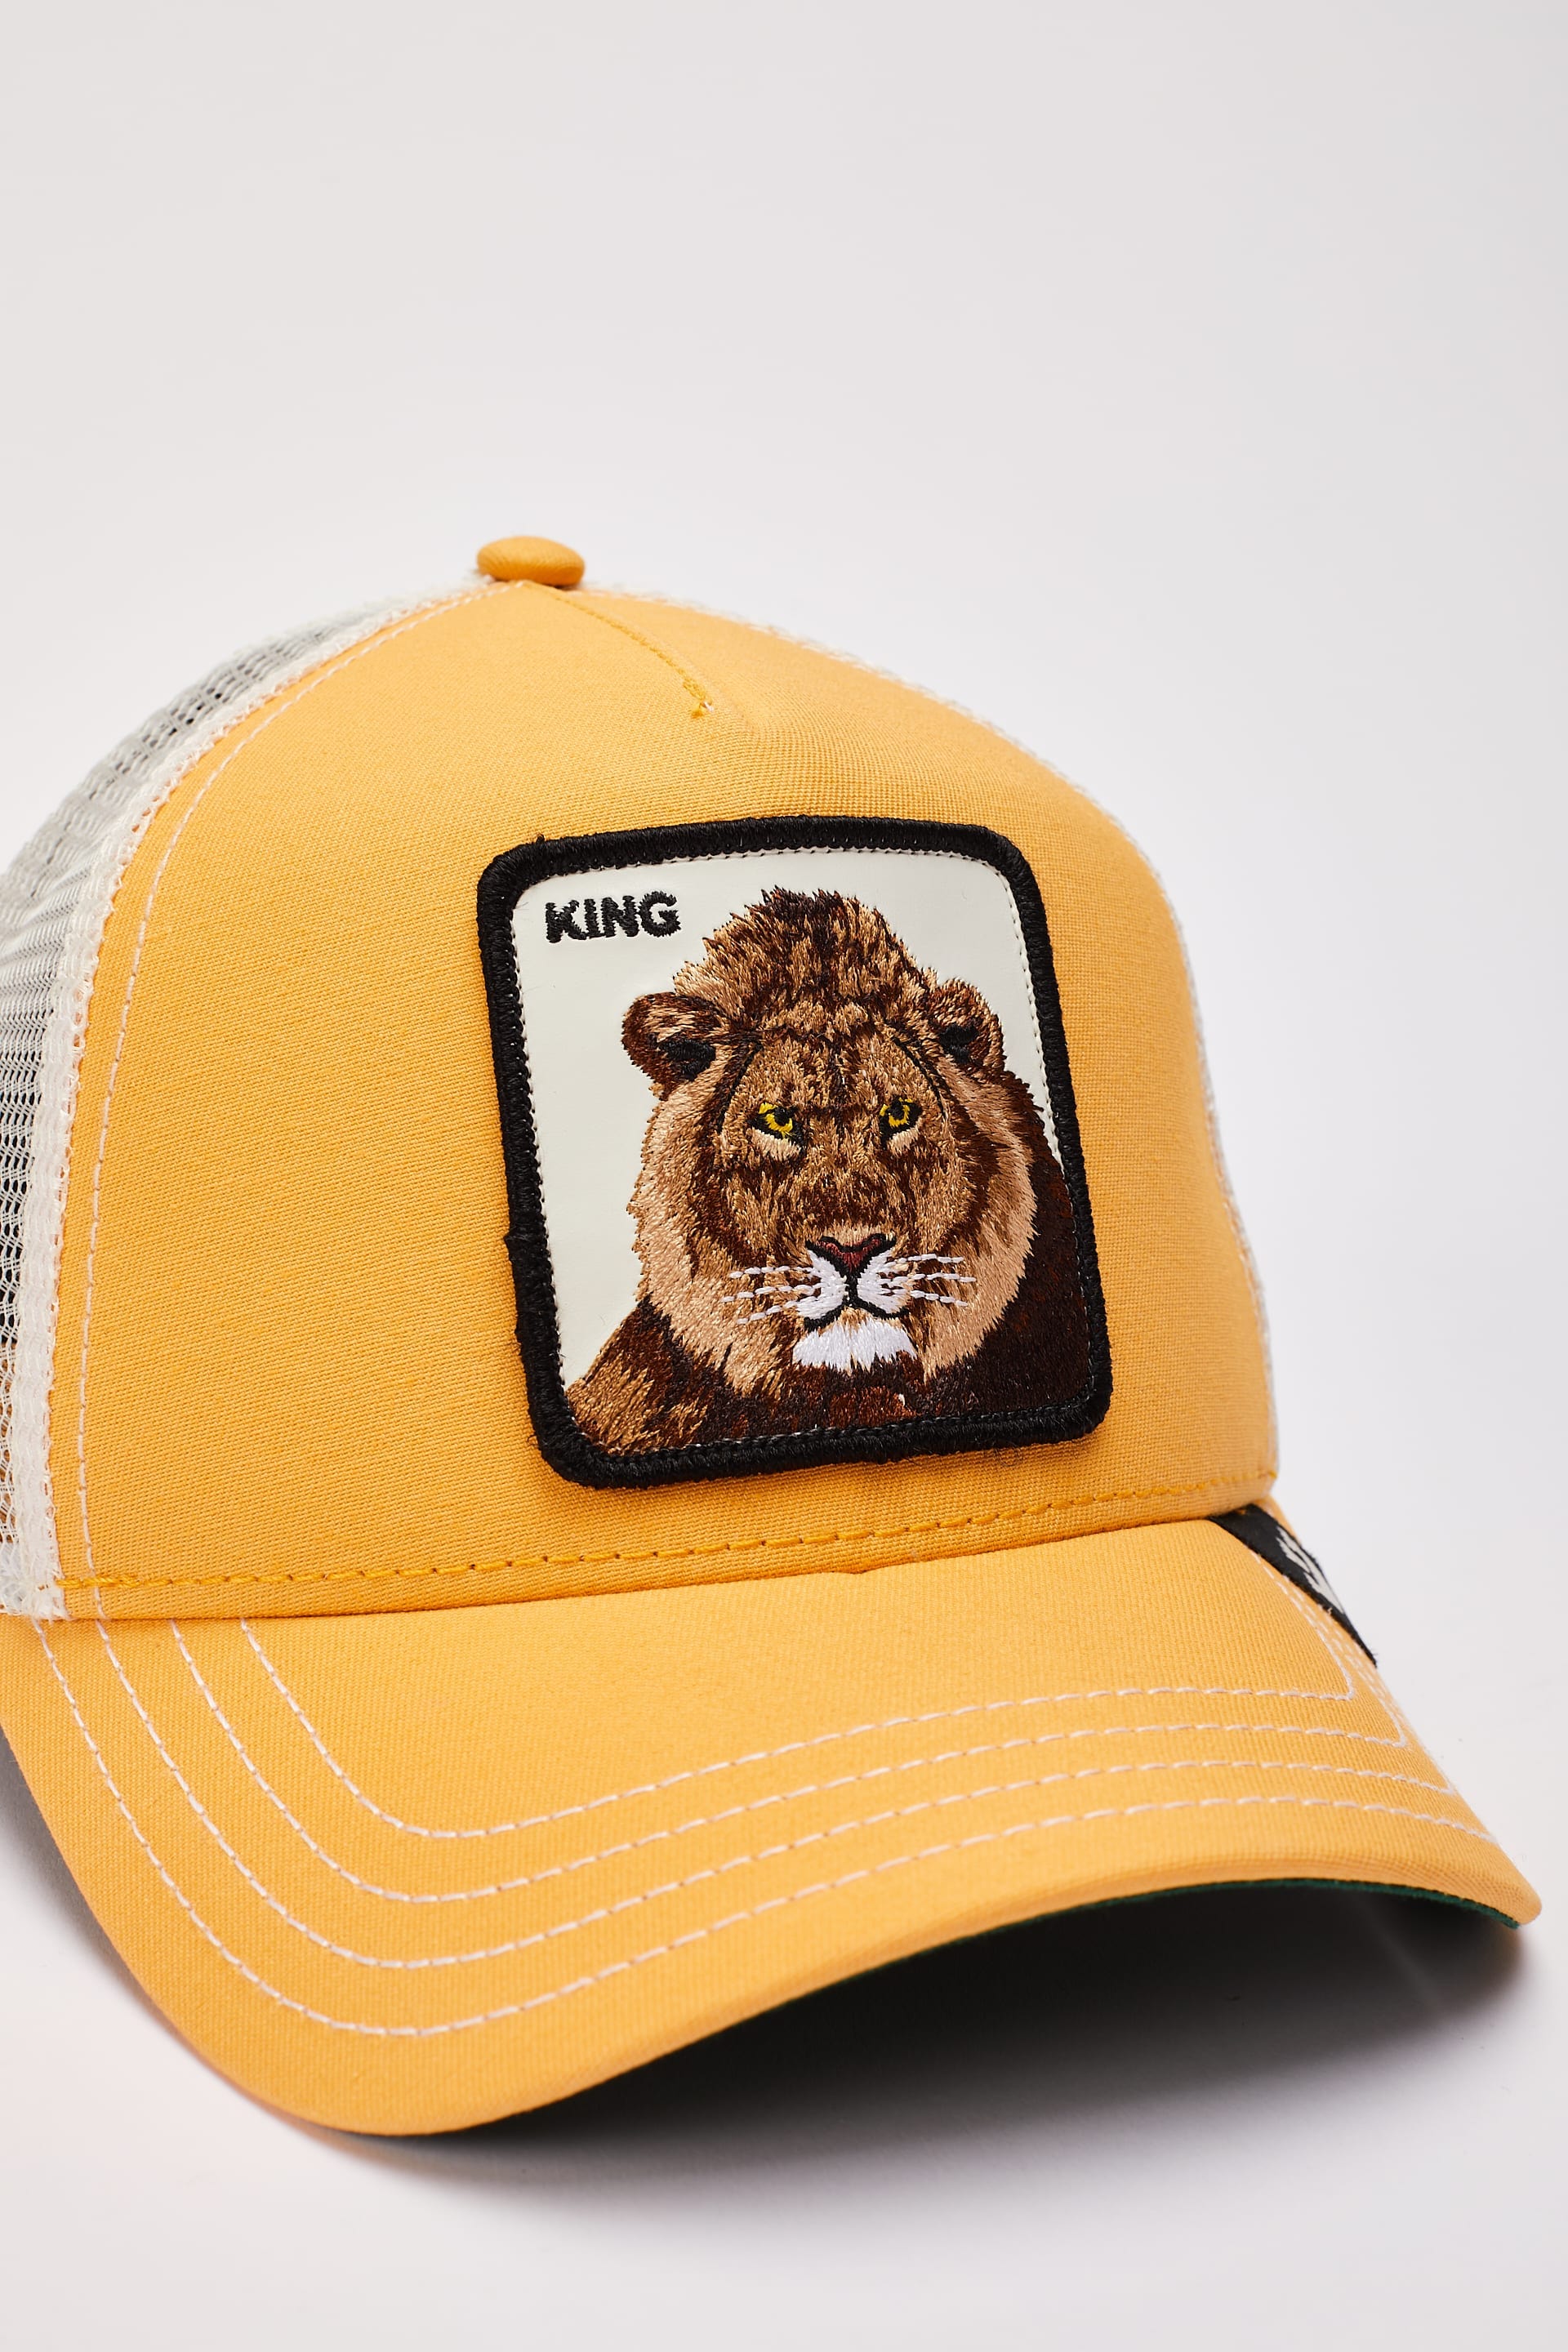 The King Lion Black/Gold Trucker - Goorin Bros. cap